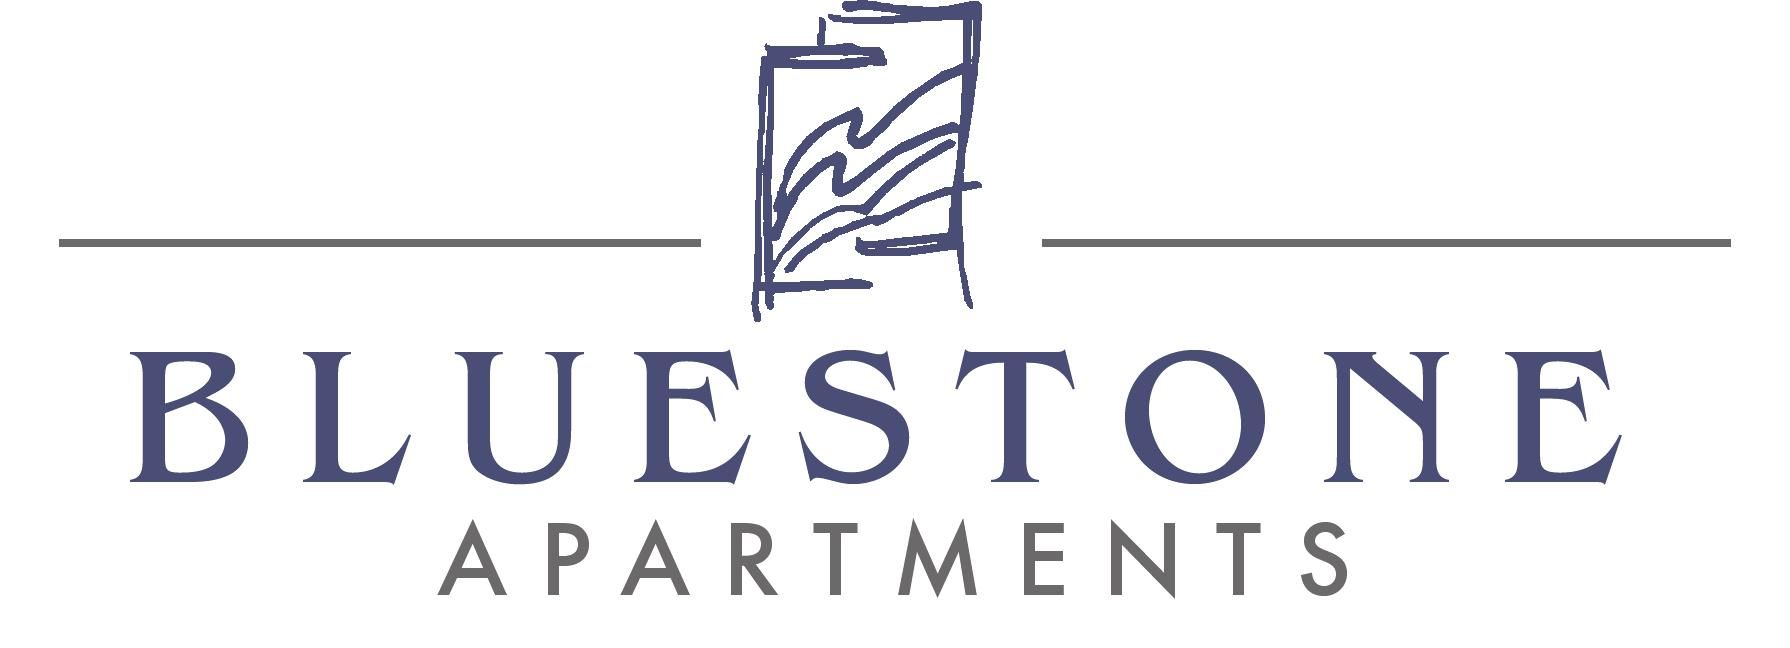 Bluestone Apartments Logo